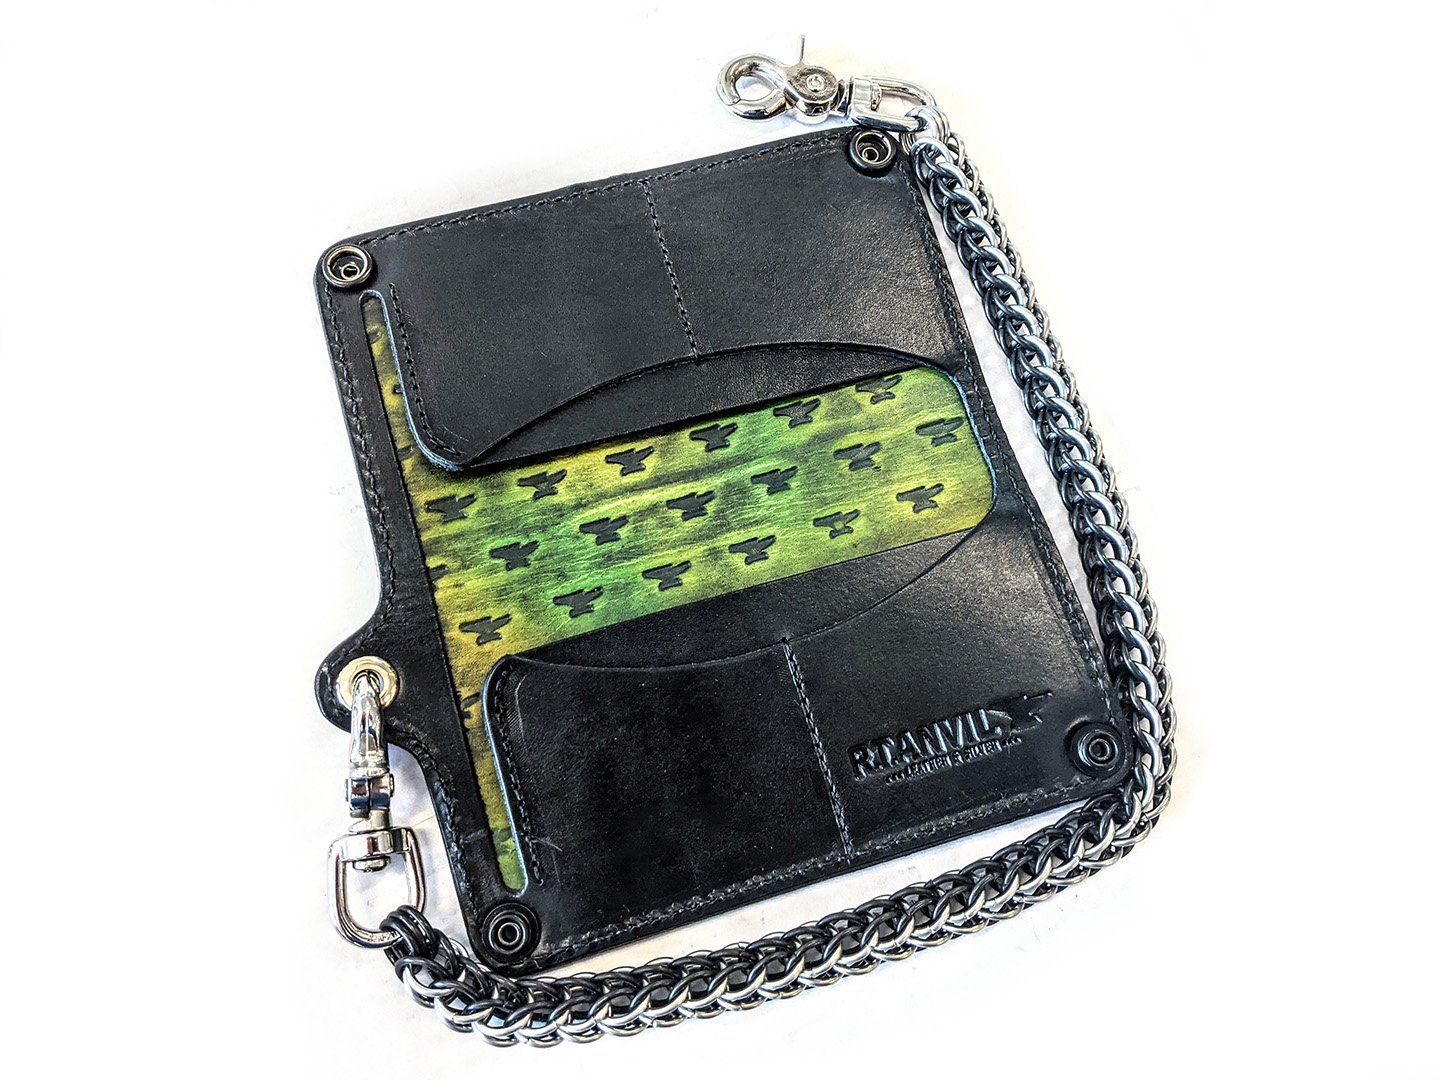 Shop 200+ Badass Tooled Leather Chain Wallets – iChainWallets